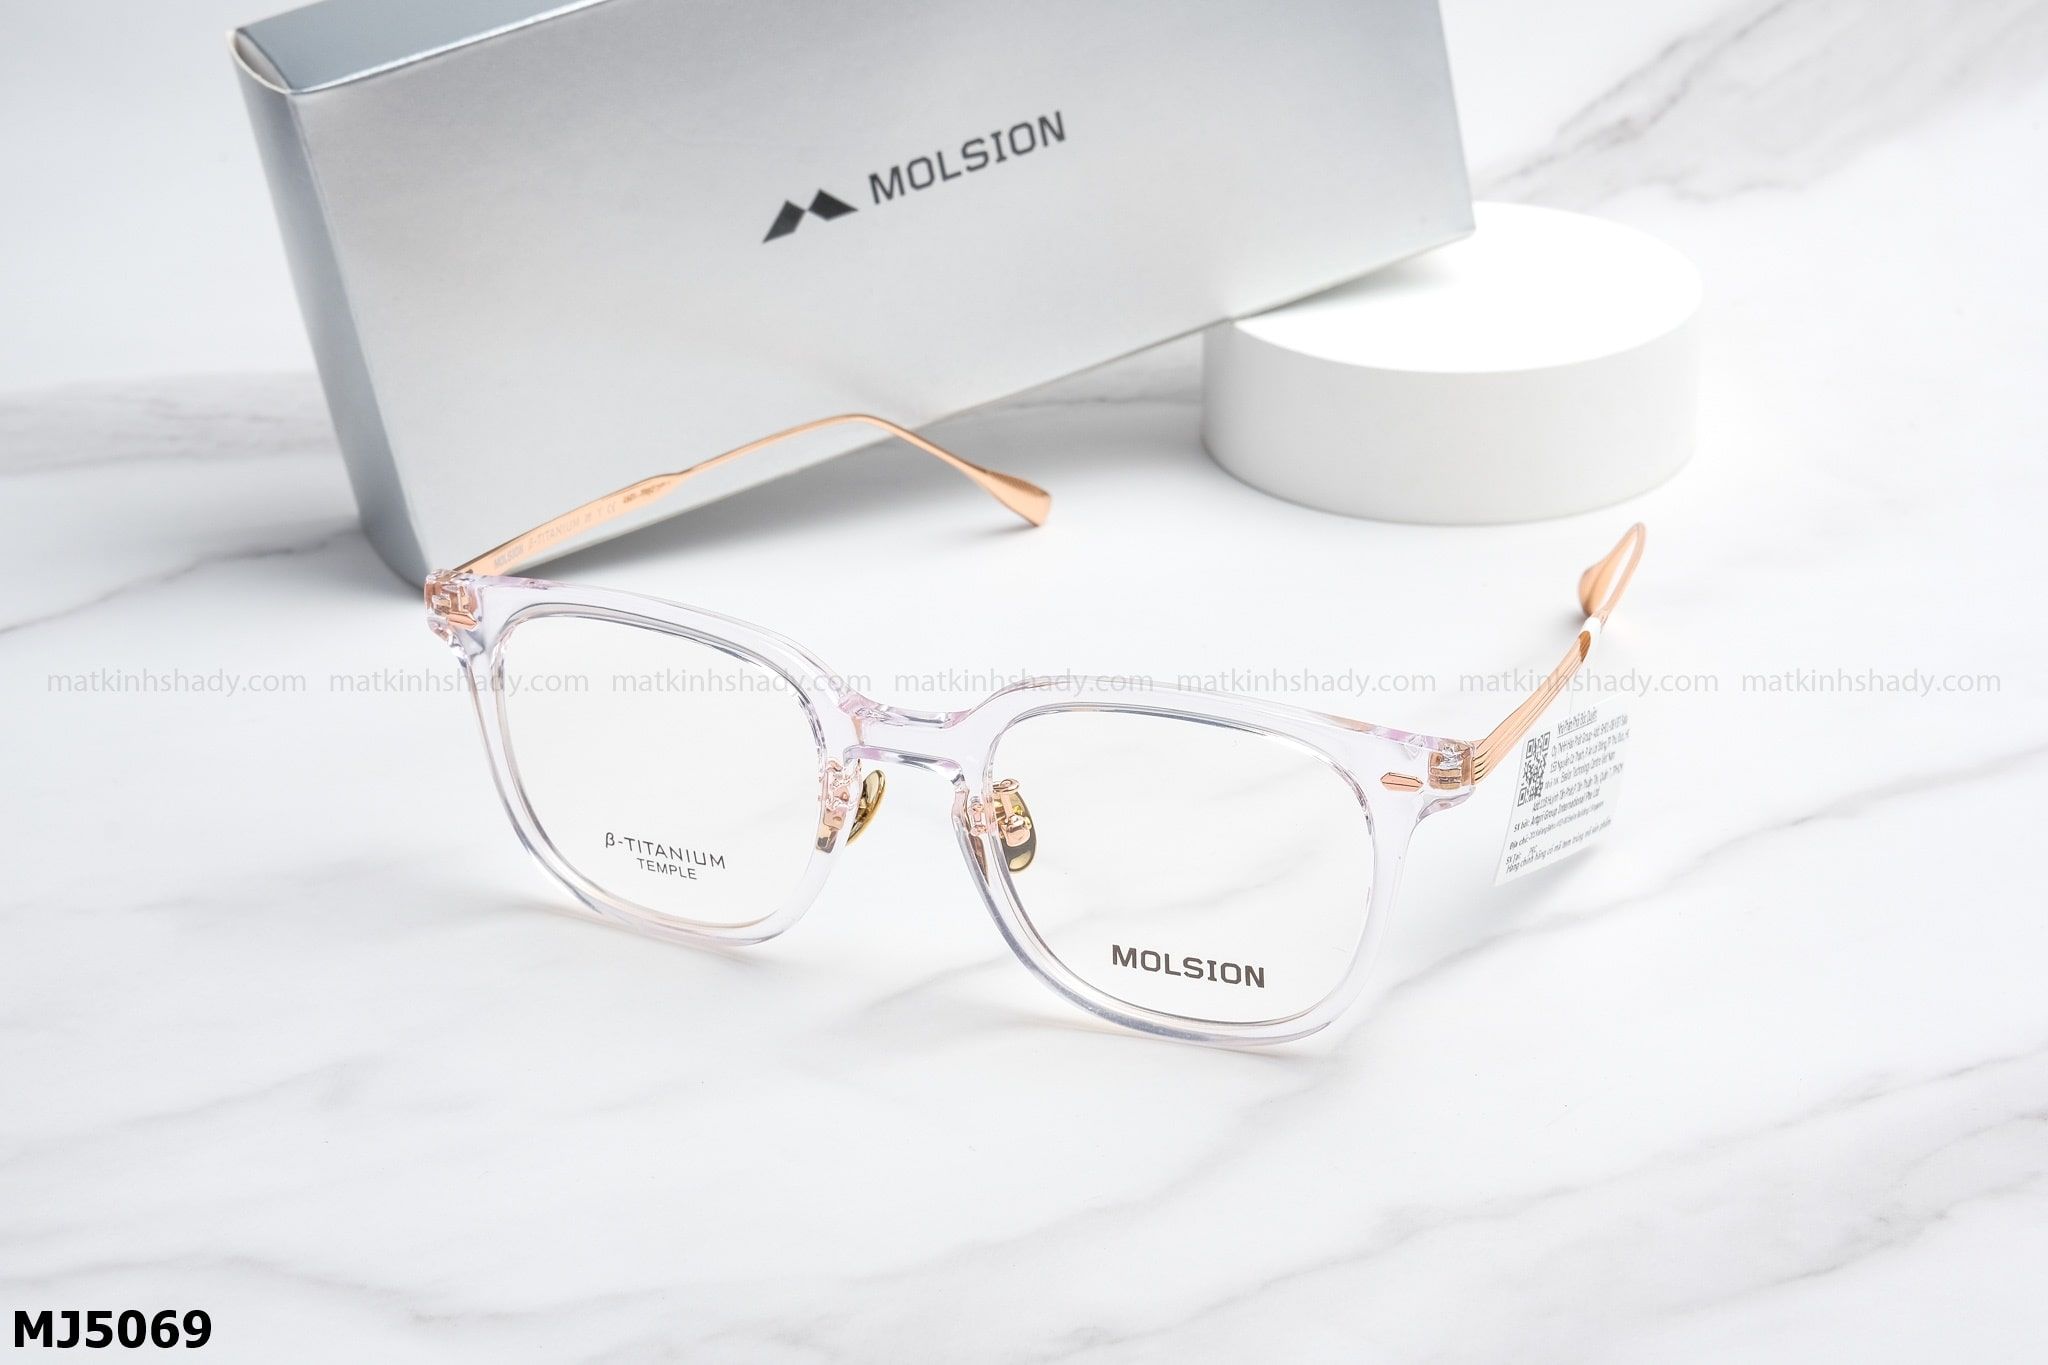  Molsion Eyewear - Glasses - MJ5069 